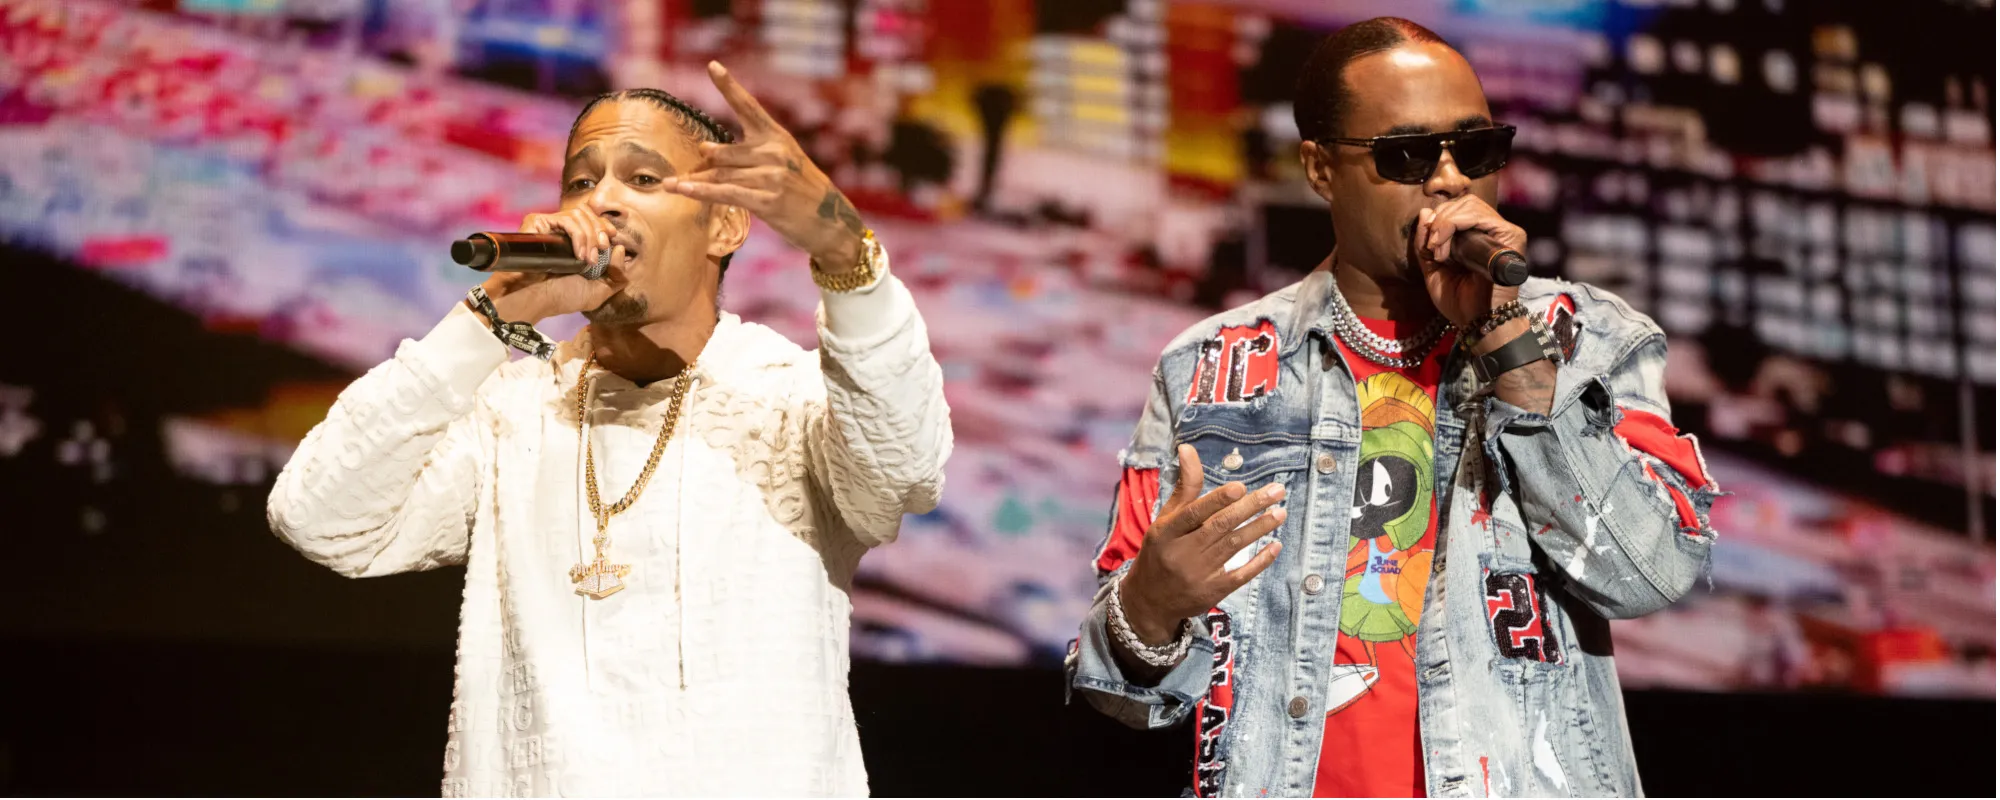 Bone Thugs-N-Harmony Announce Final Show as a Fivesome, Bizzy Bone Set to Retire